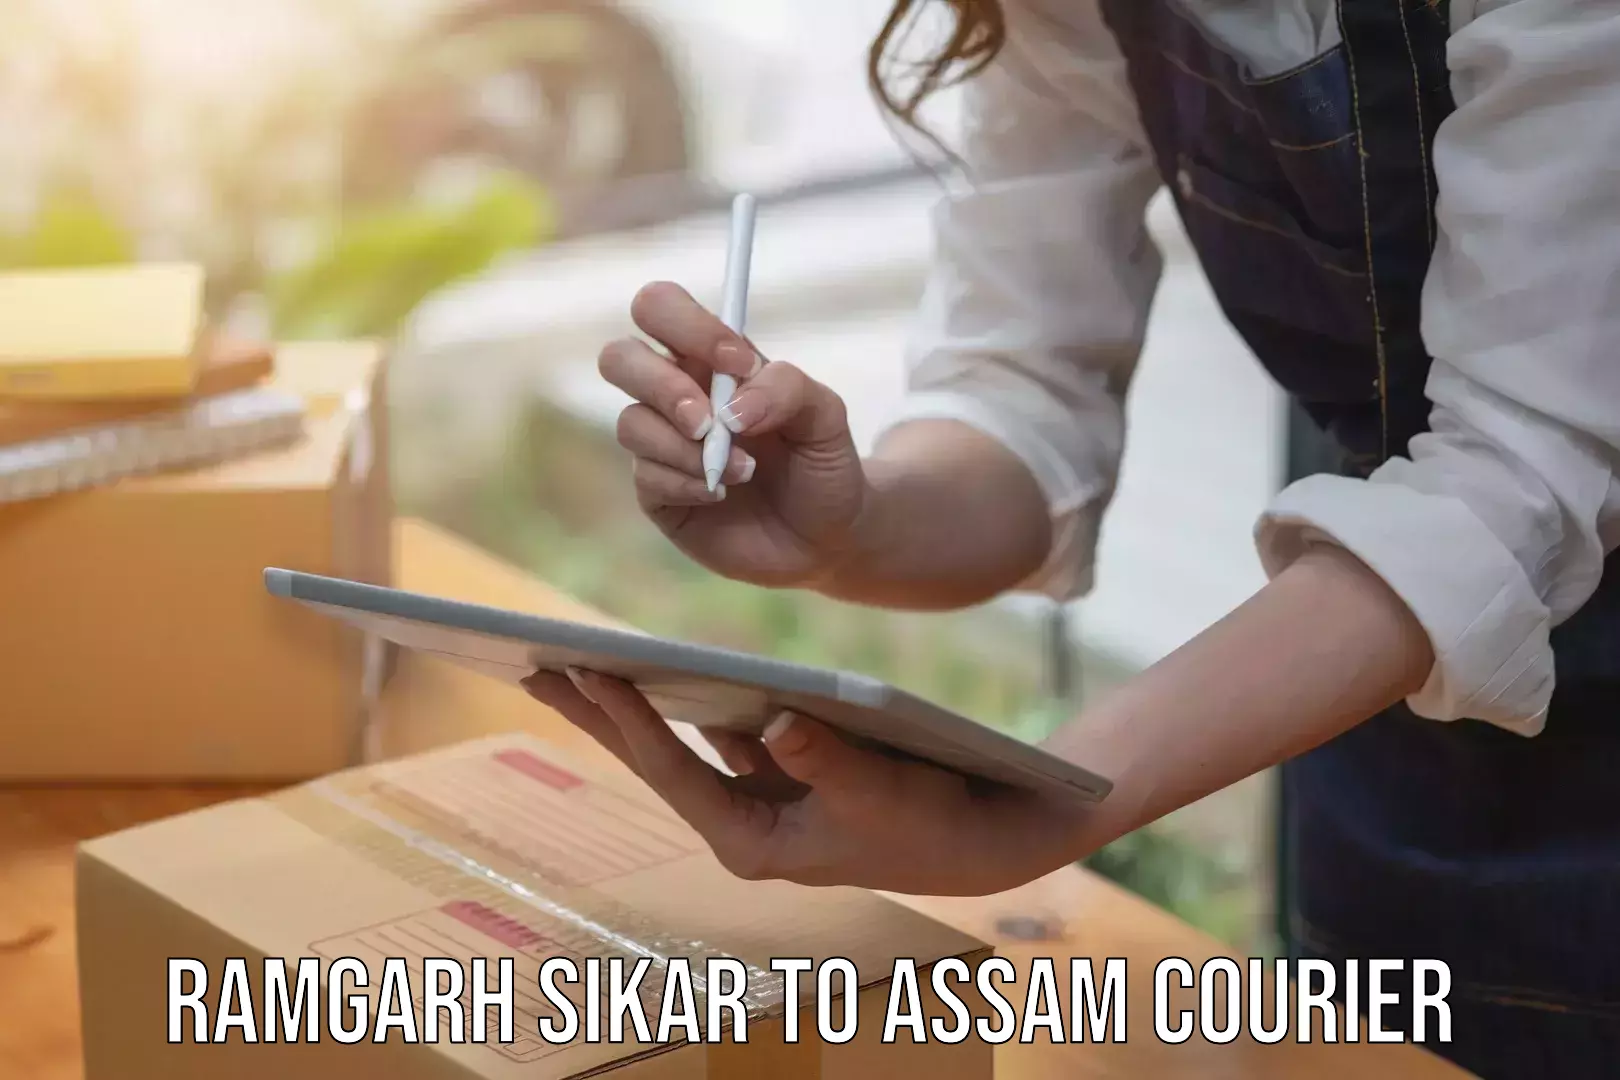 Courier service comparison Ramgarh Sikar to Agomani